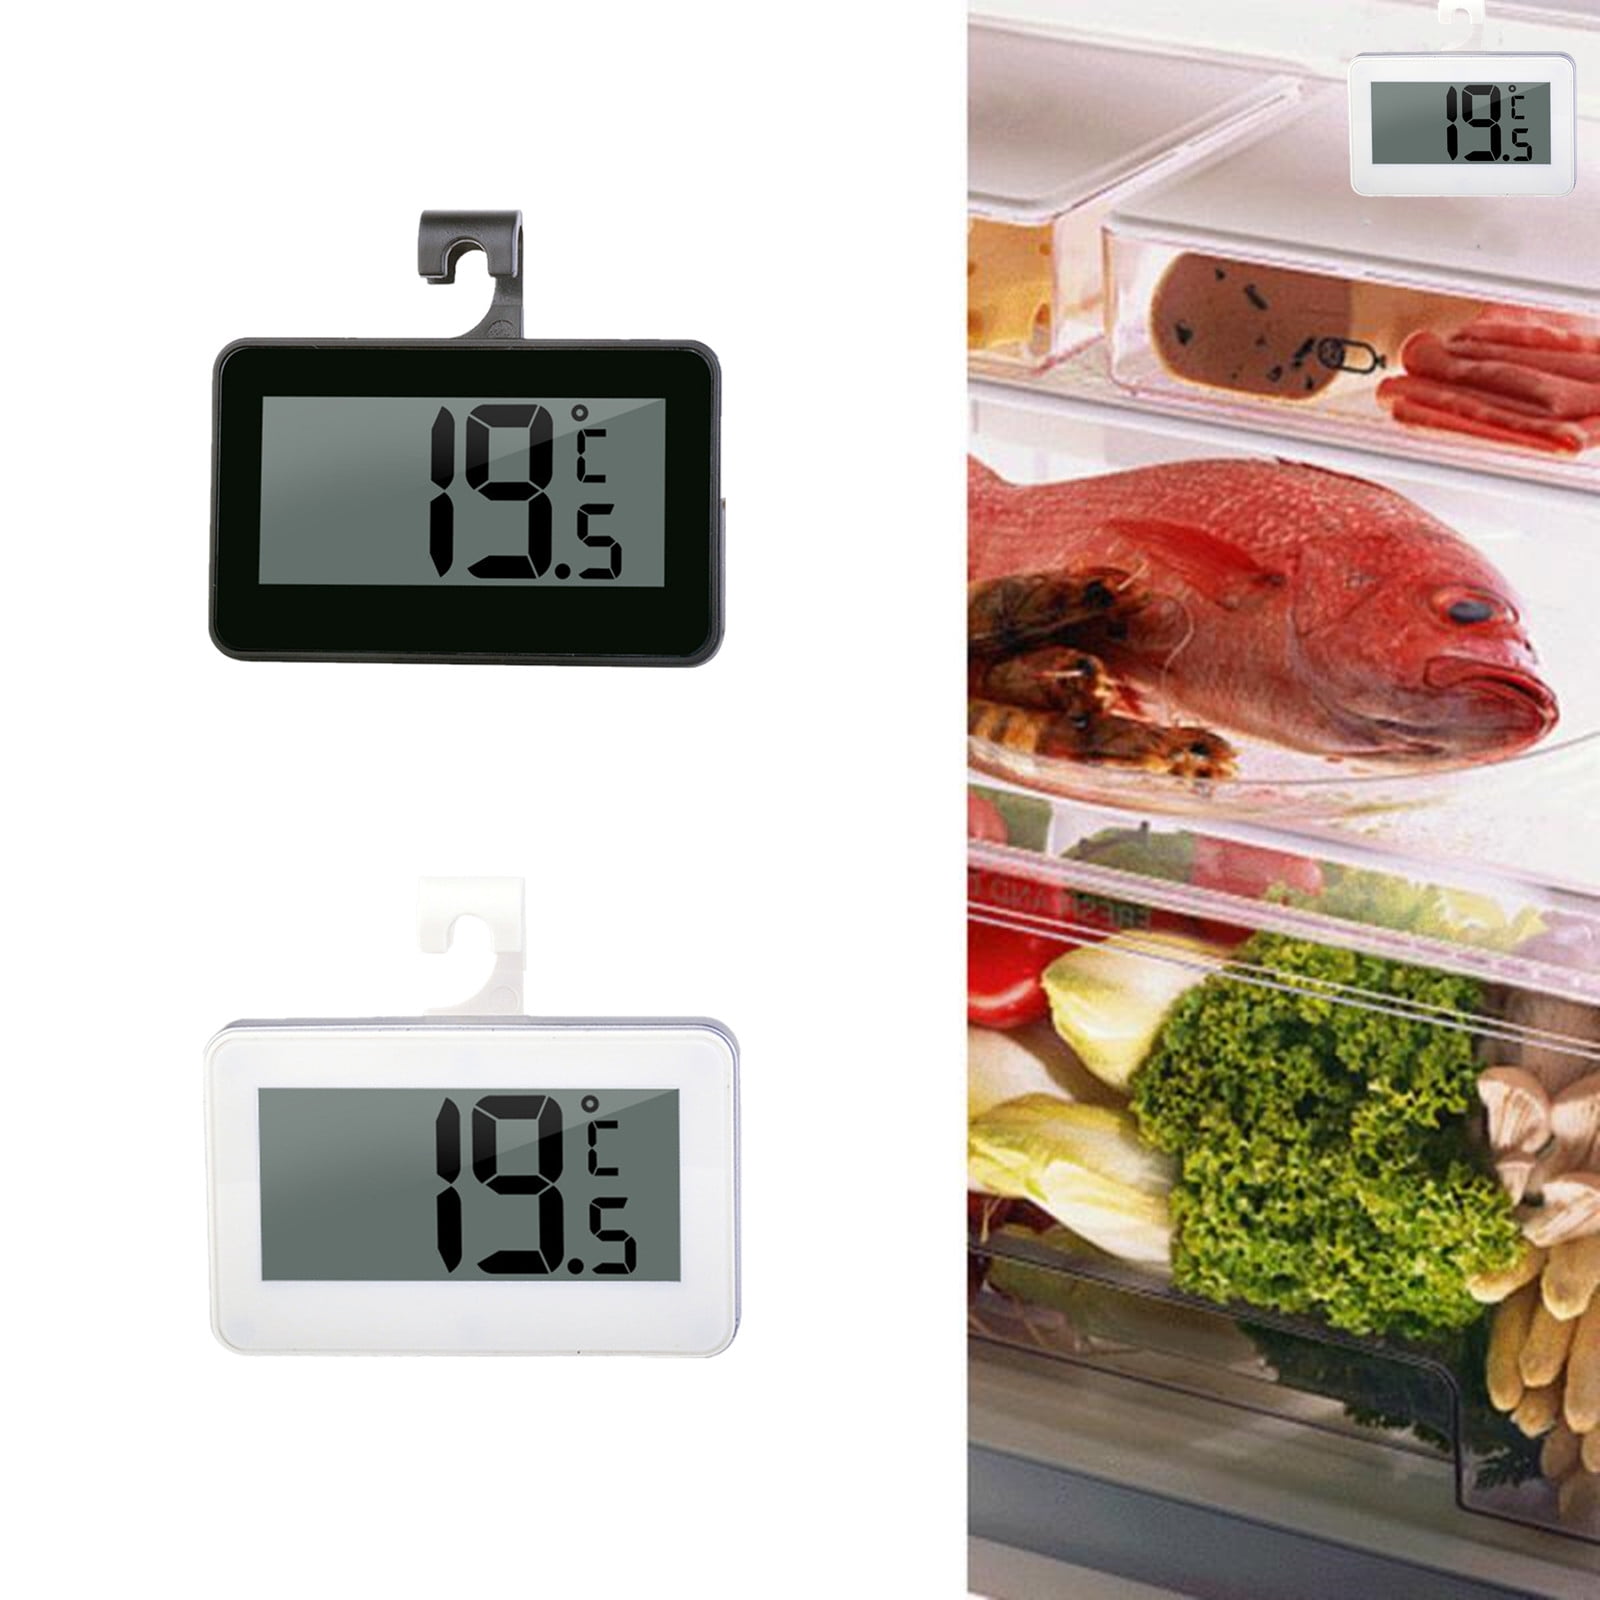 Portable Frost Alarm Temperature Monitor White Ouken Refrigerator Thermometer,Mini LCD Digital Waterproof Fridge Freezer Thermometer 